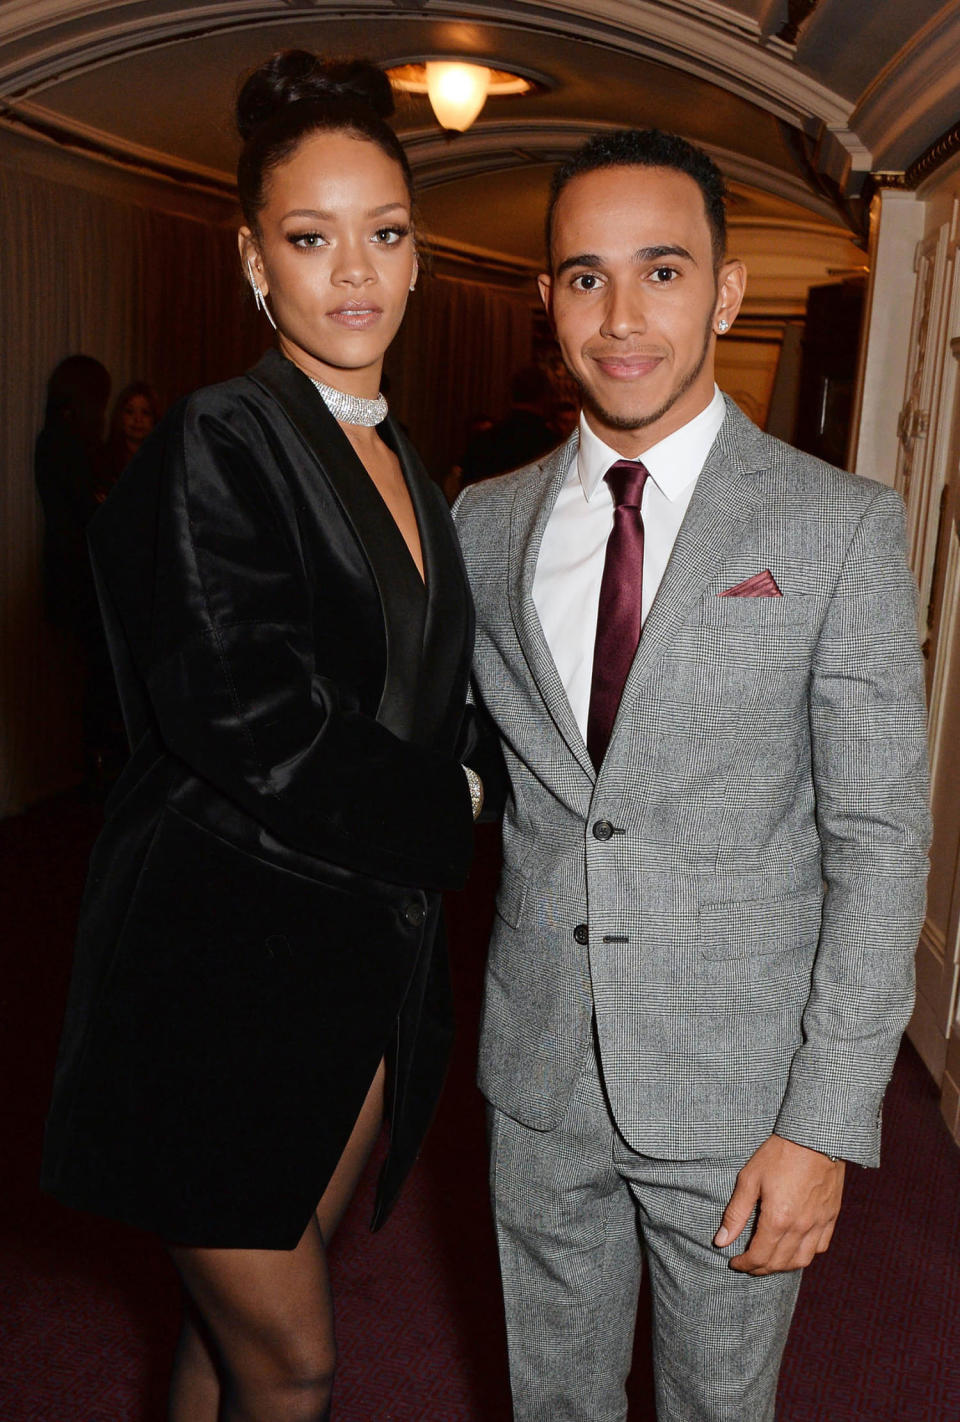 Rihanna and Lewis Hamilton at the British Fashion Awards in 2014. (David M. Benett / Getty Images)